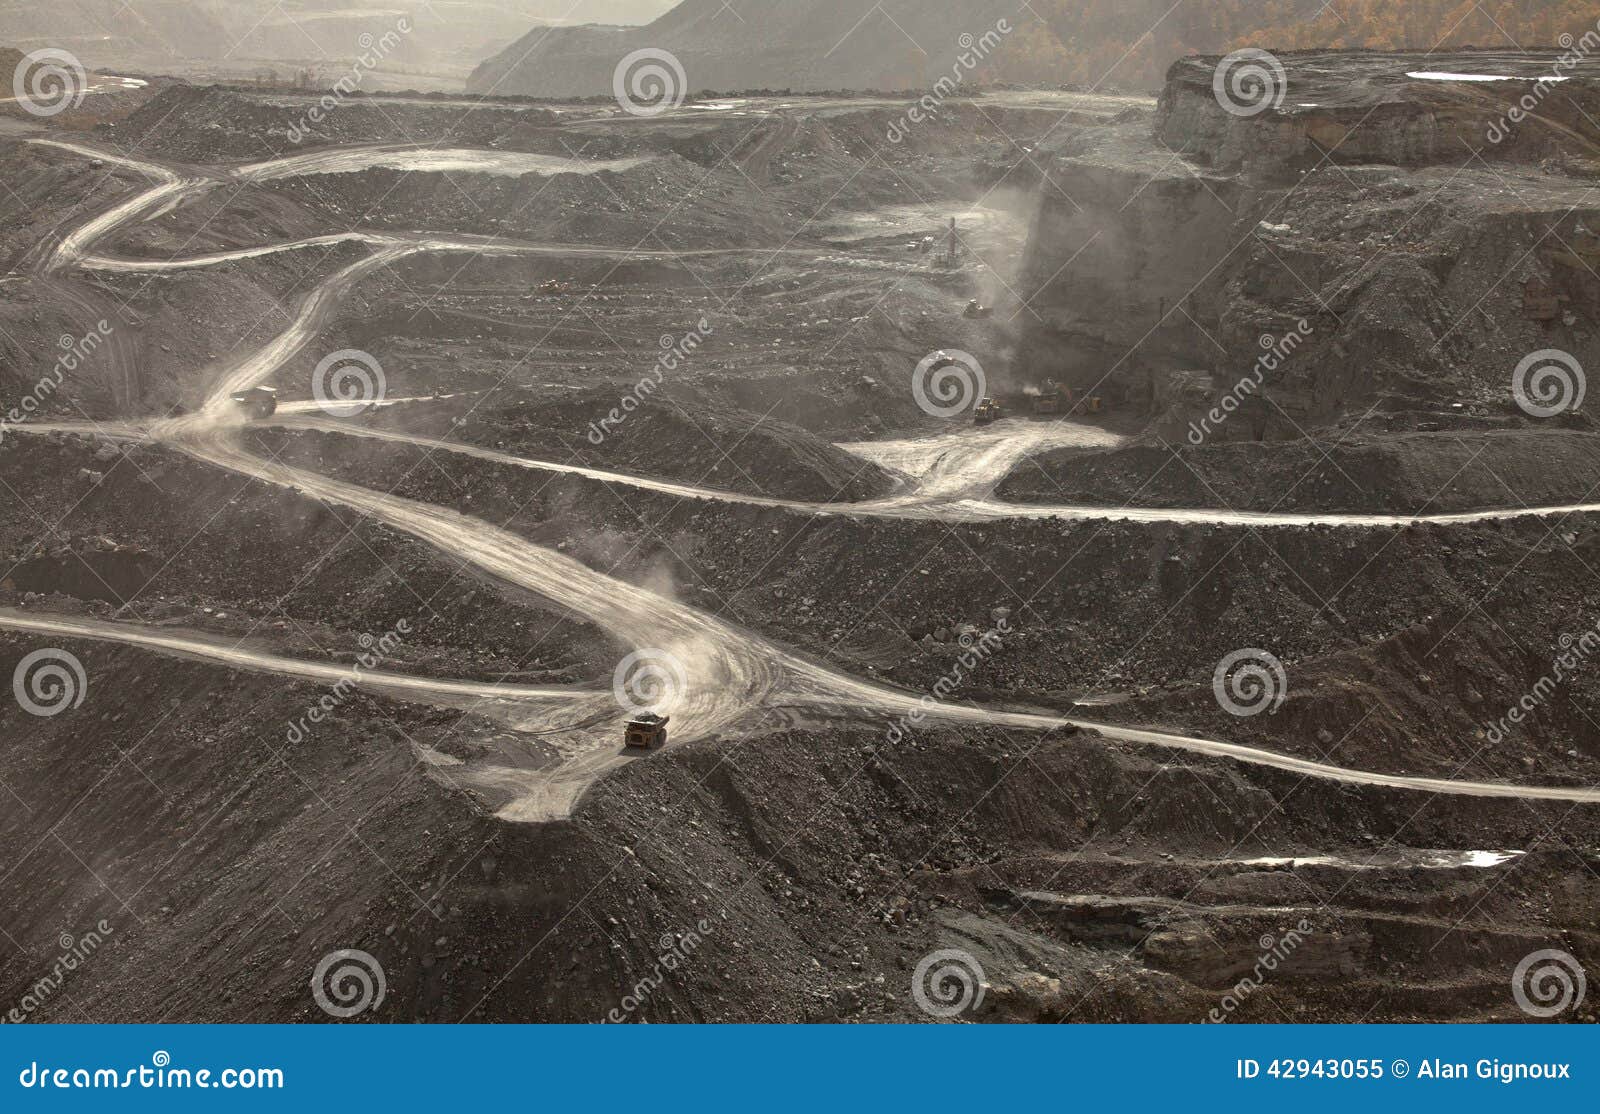 a coal mine, appalachia, america